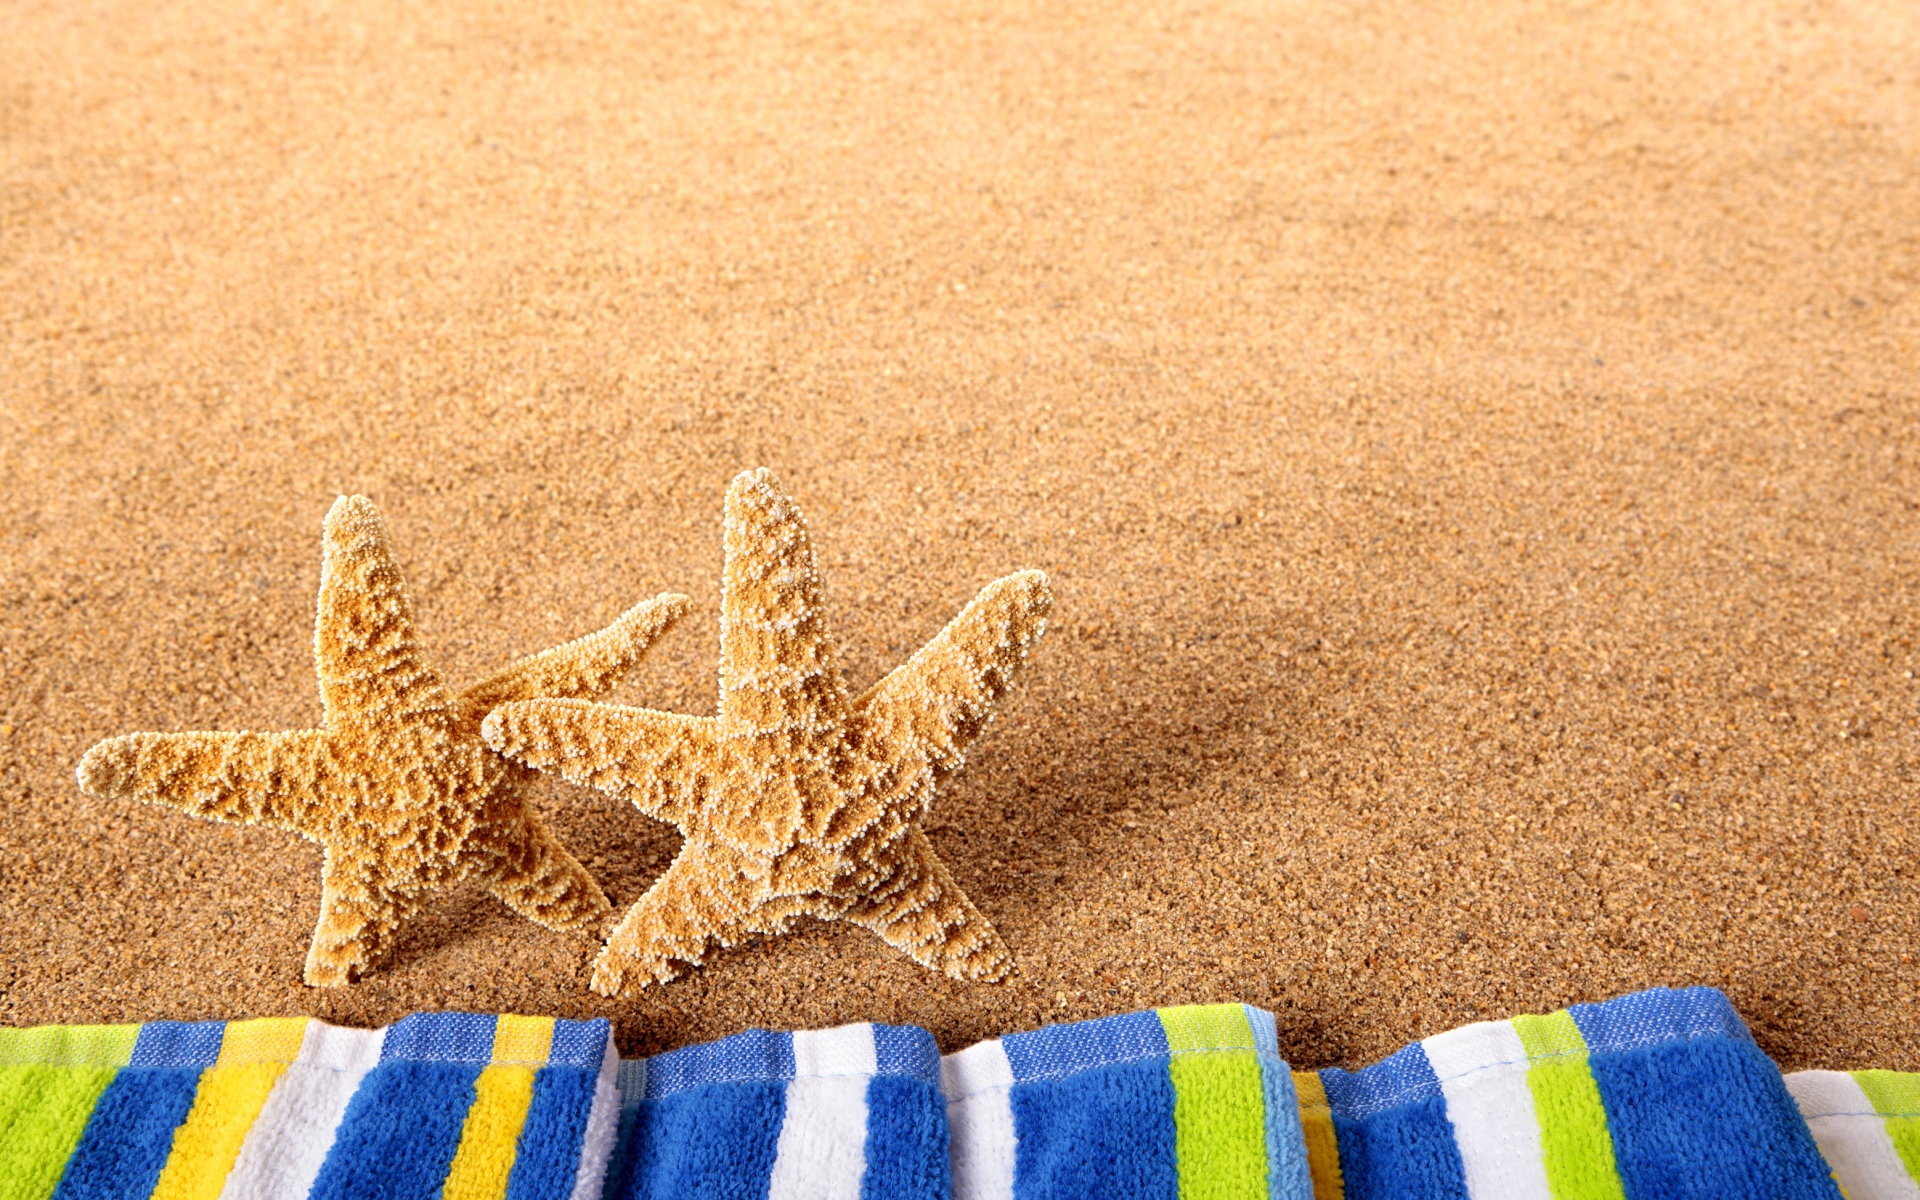 Две морские звезды на желтом песке с полотенцем